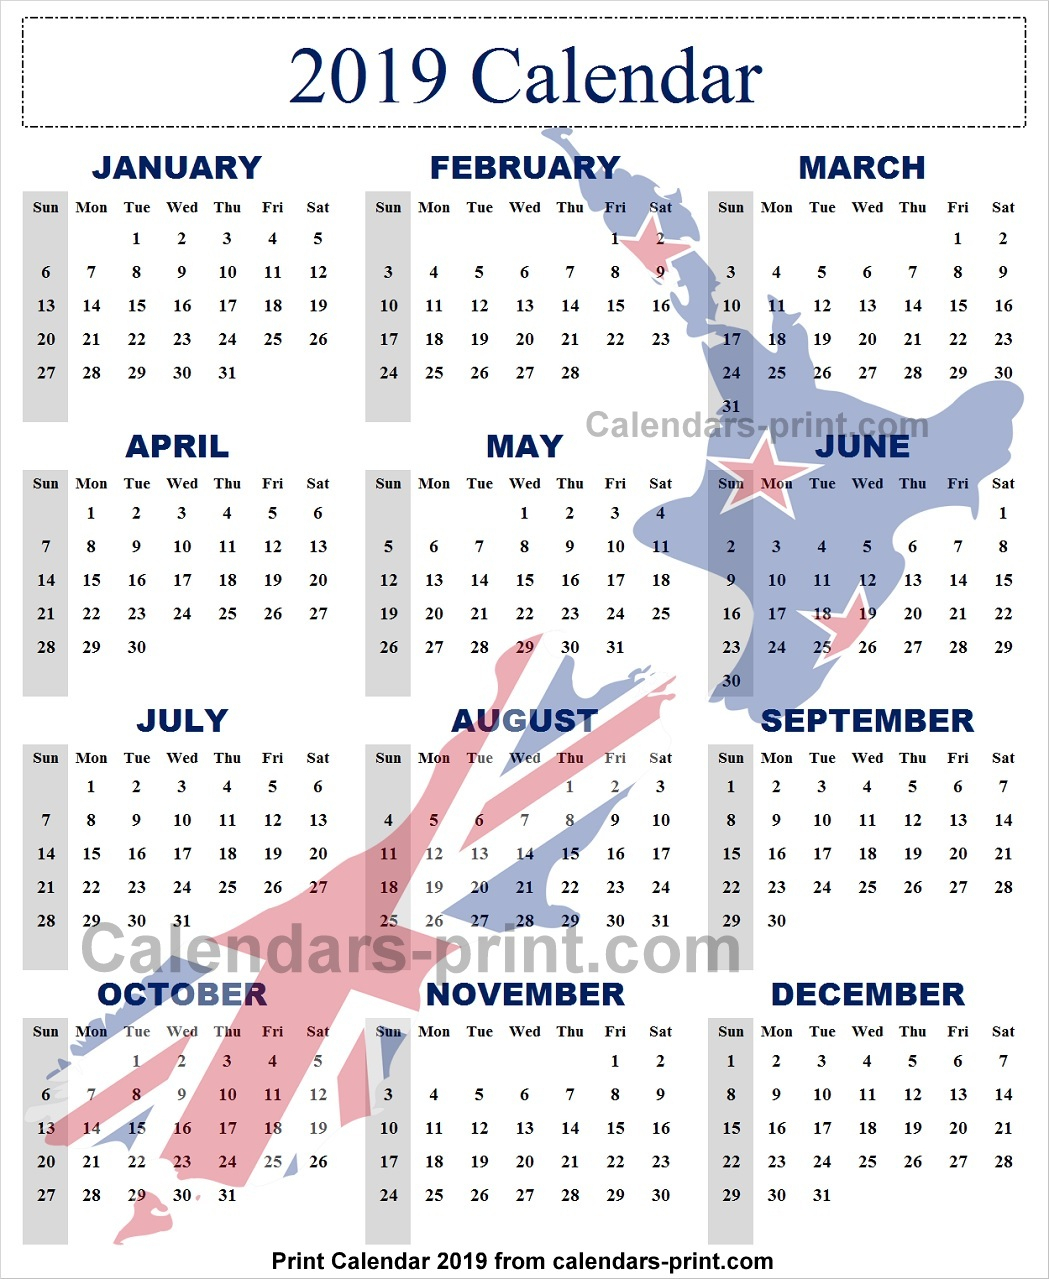 Calendar 2019 New Zealand Archives - Calendar To Print